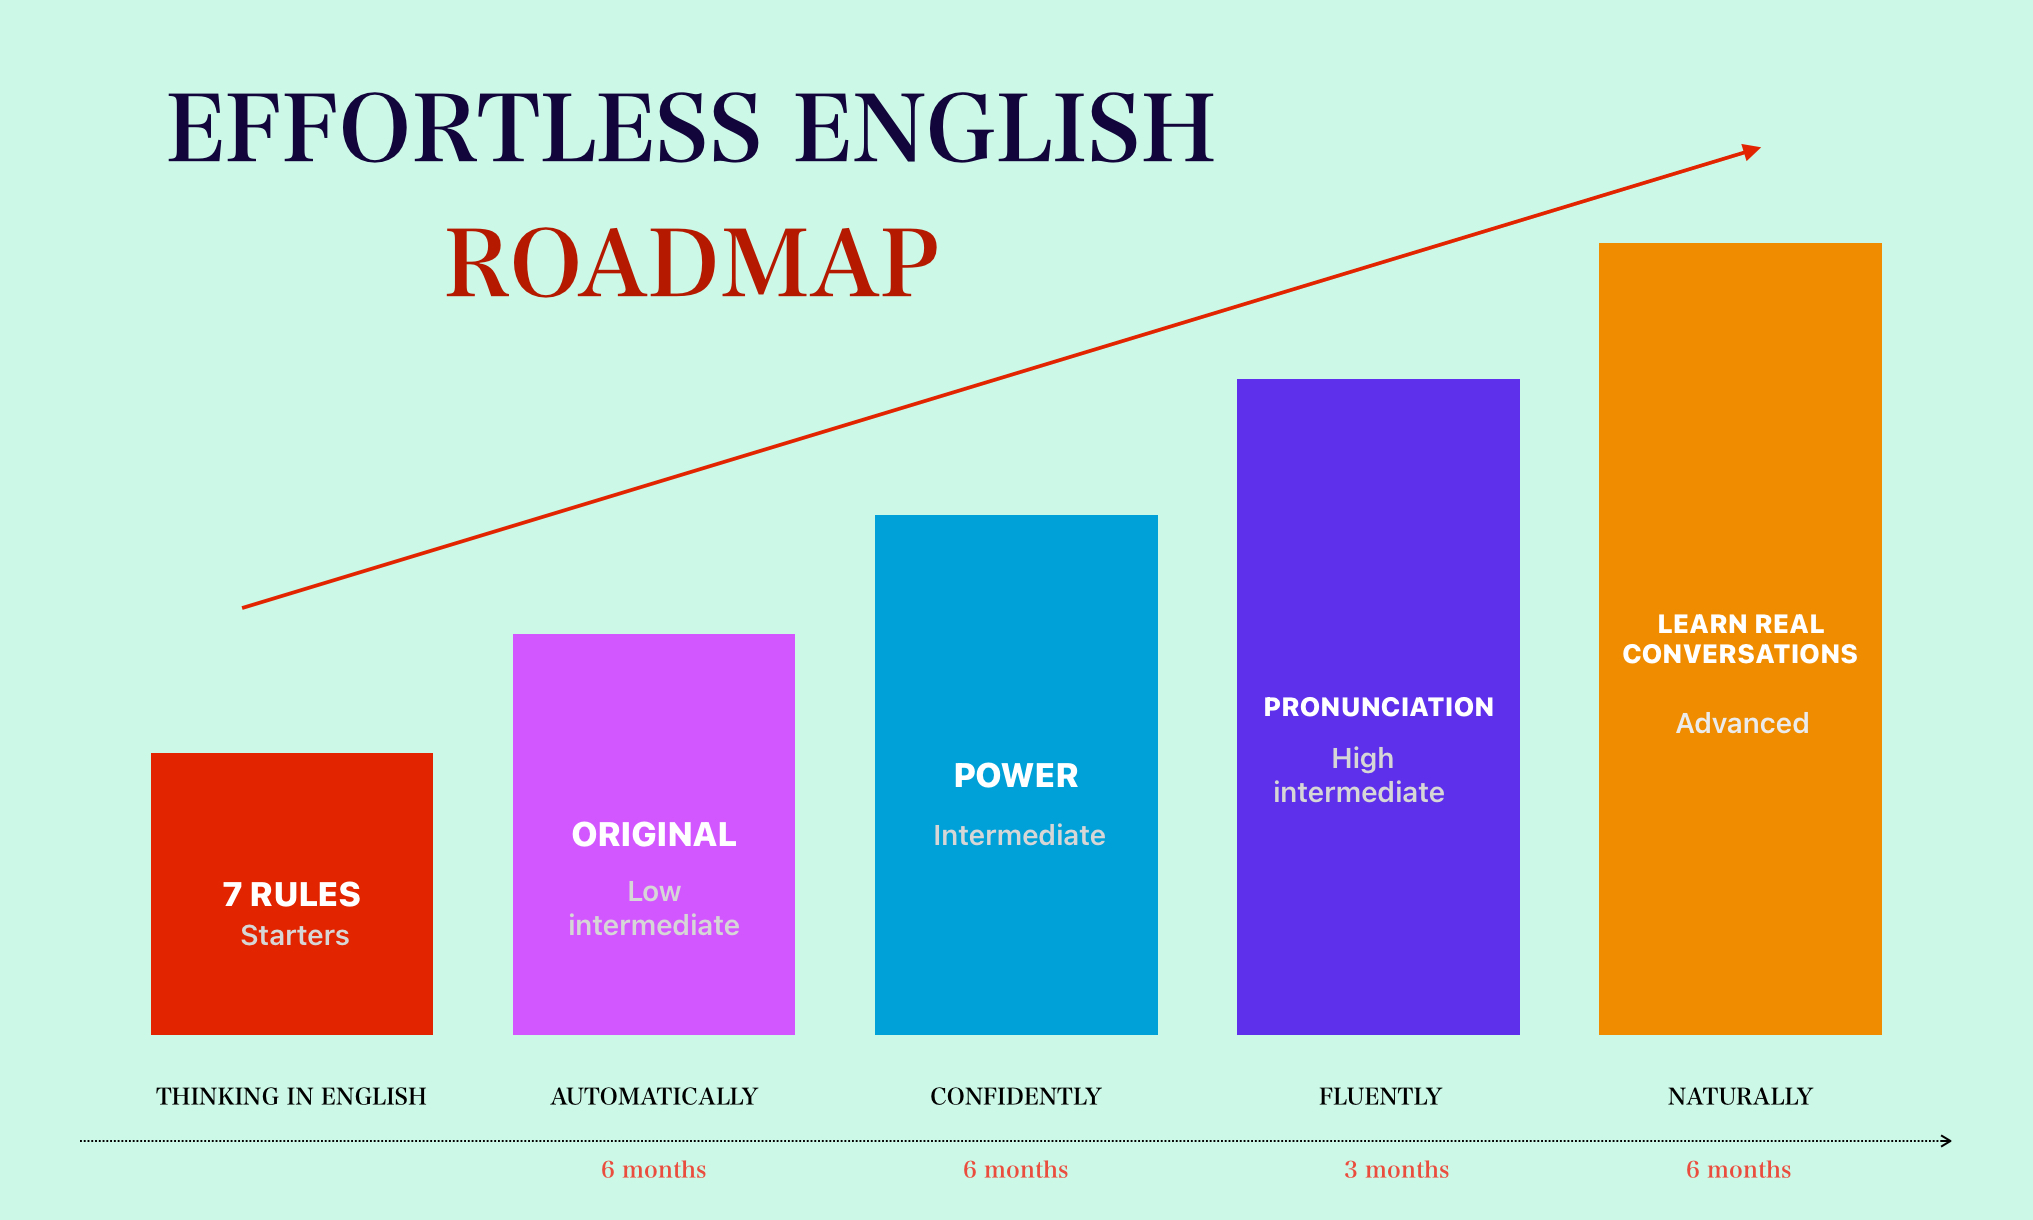 Effortless English roadmap